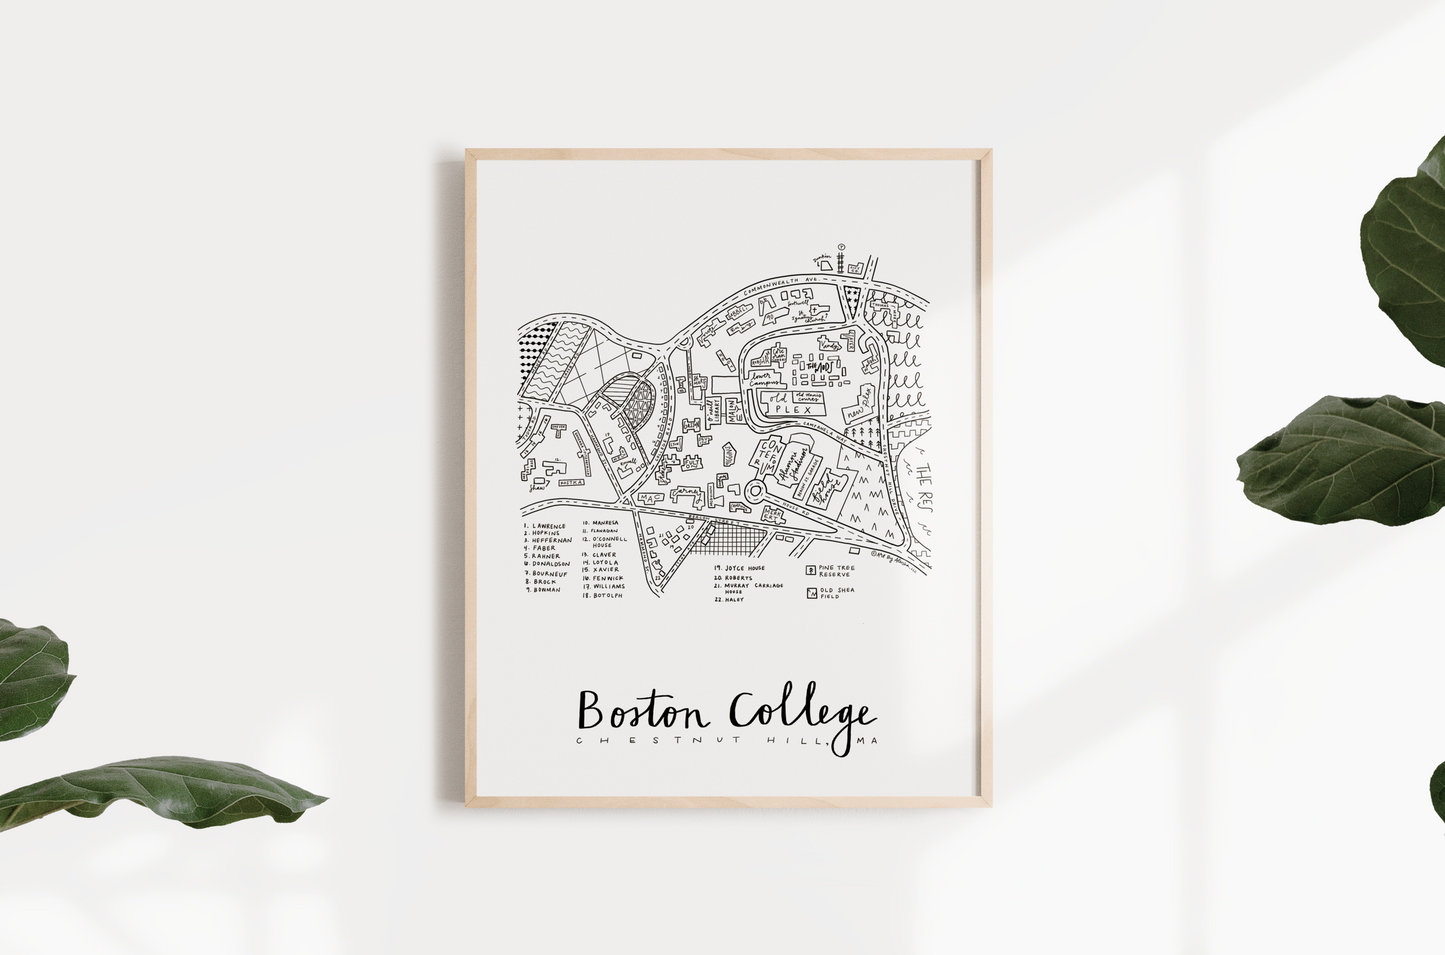 Boston College (Chestnut Hill) Campus Map Print